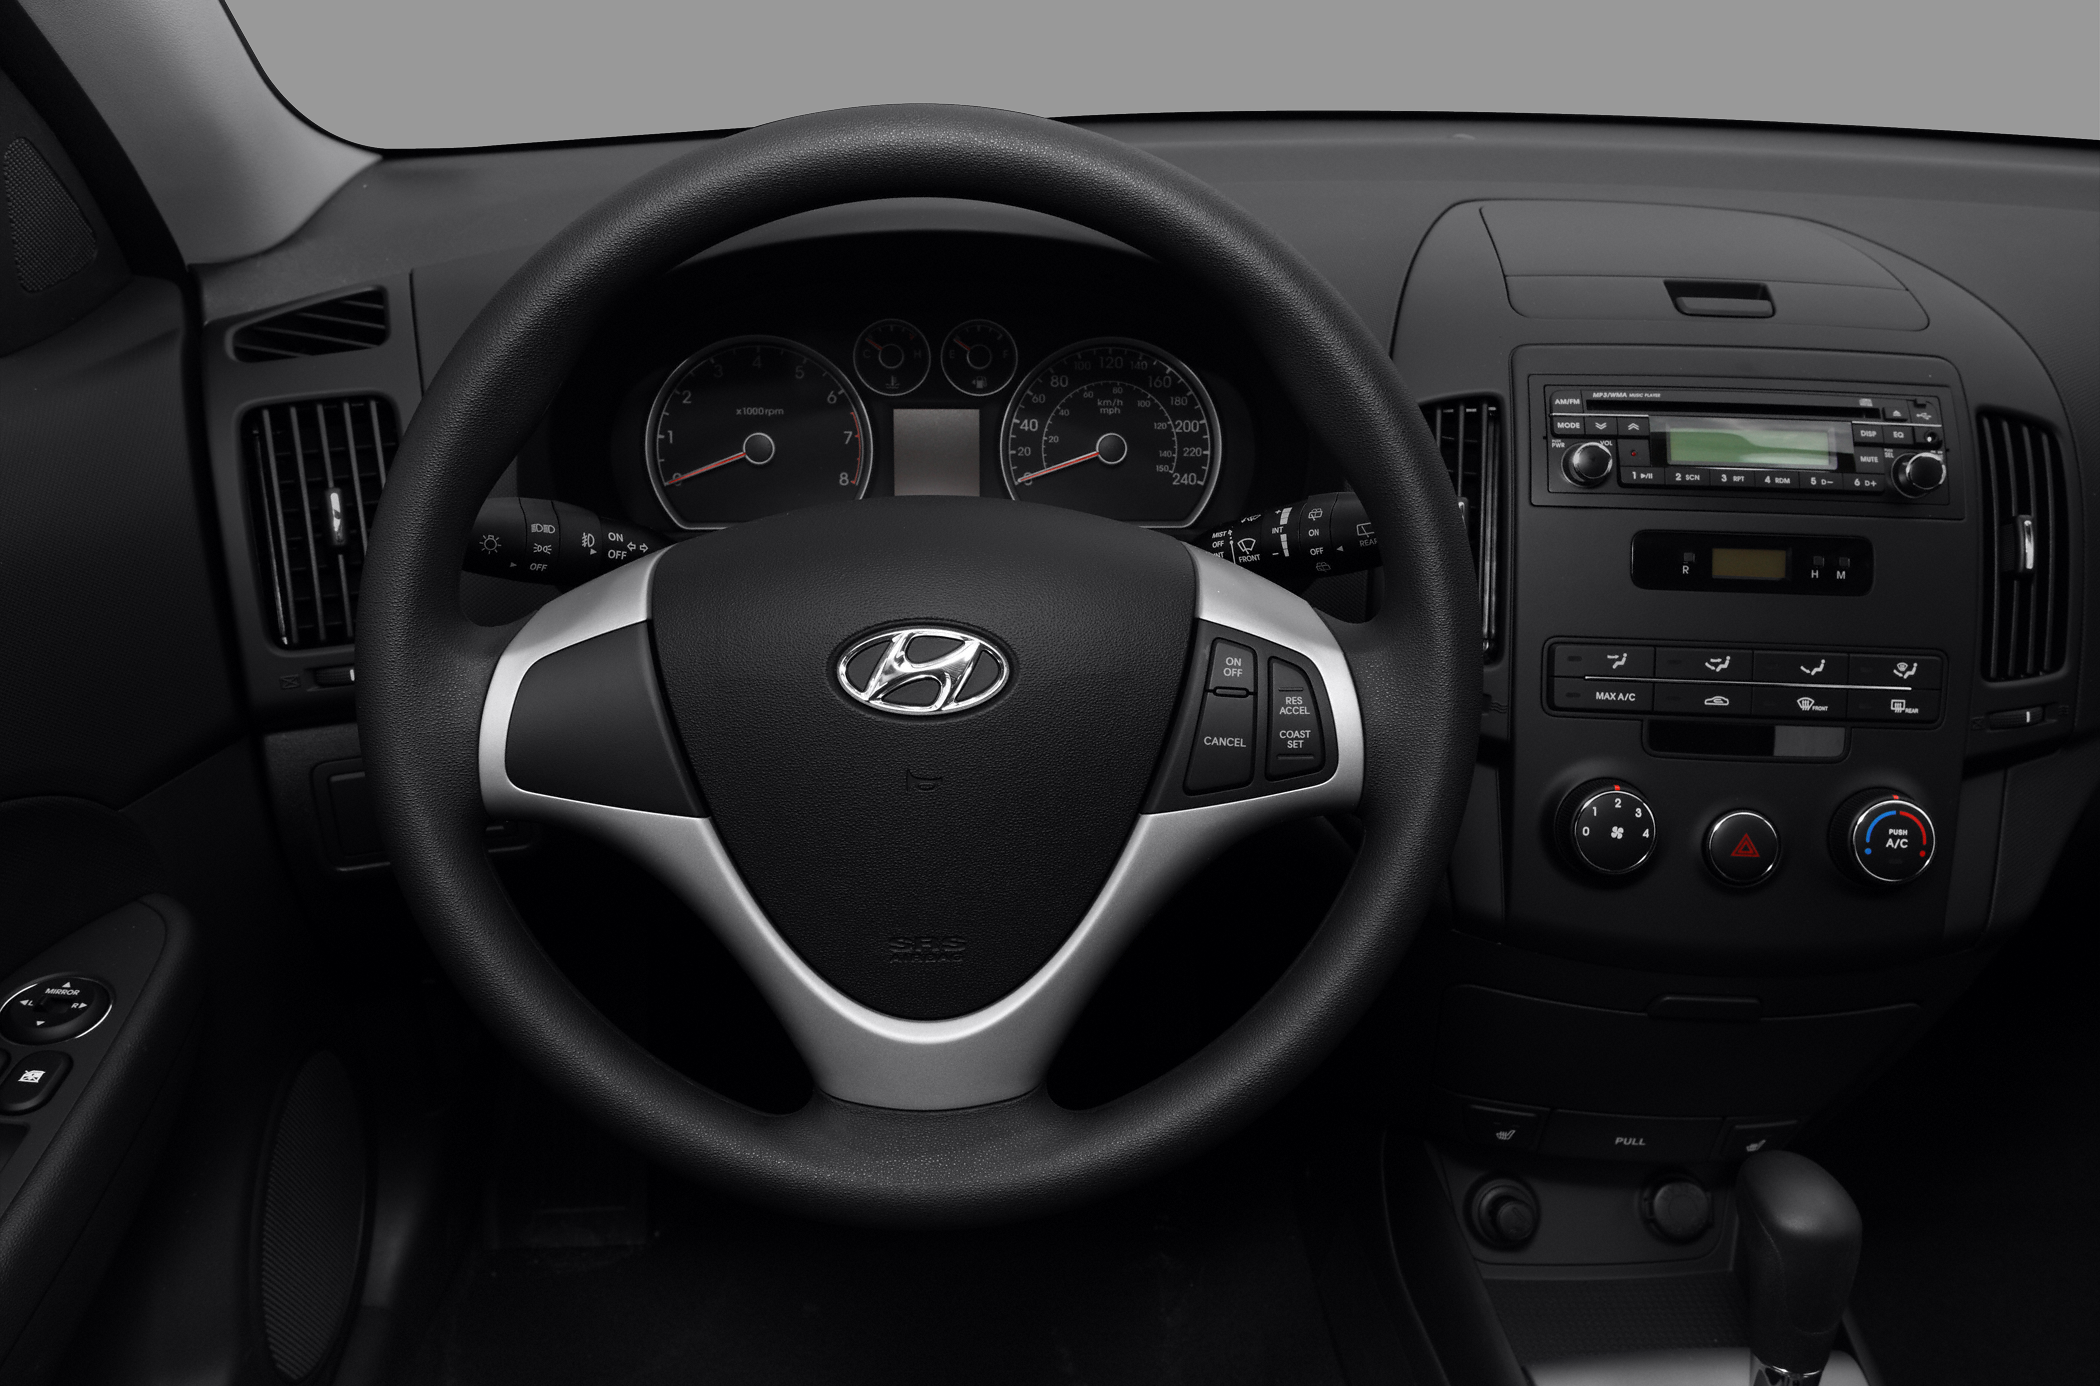 2012 Hyundai Elantra Touring